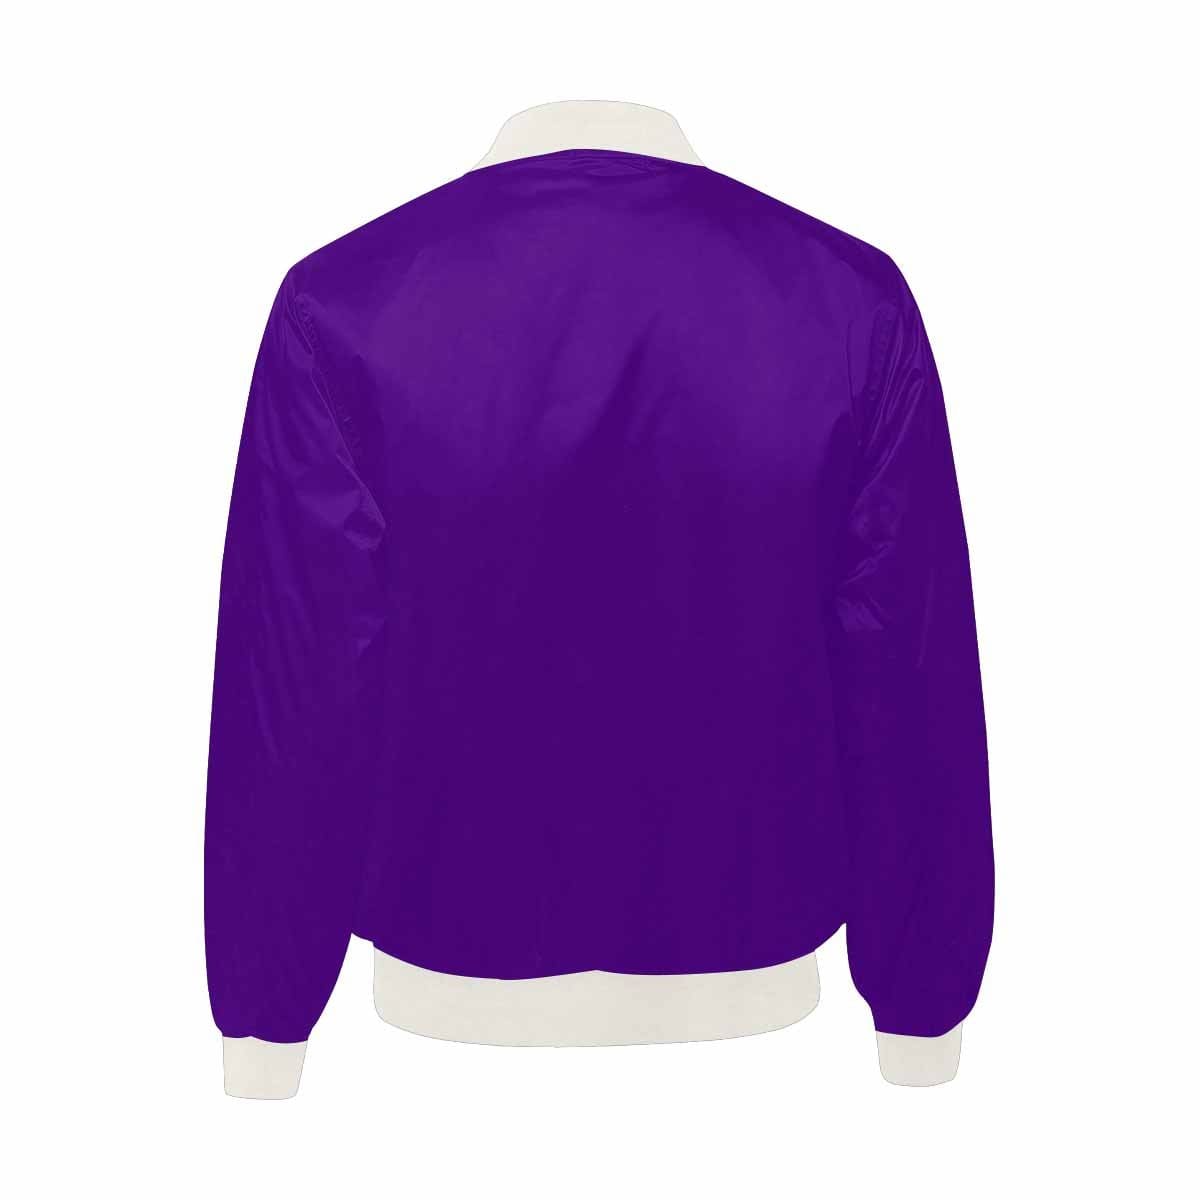 Mens Jacket Indigo Purple Bomber Jacket - Mens | Jackets | Bombers